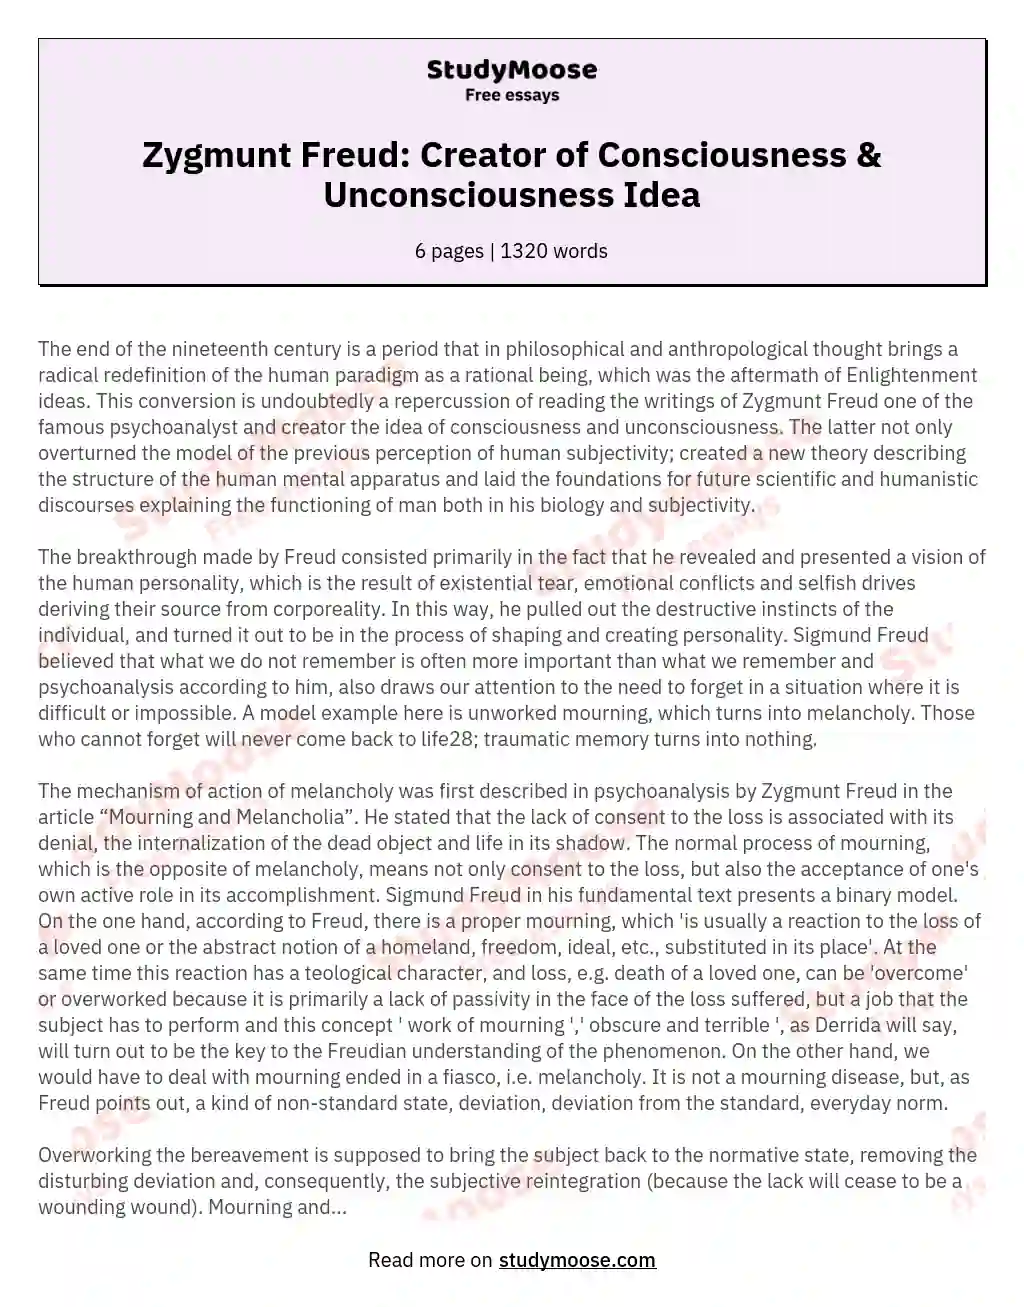 Zygmunt Freud: Creator of Consciousness & Unconsciousness Idea essay